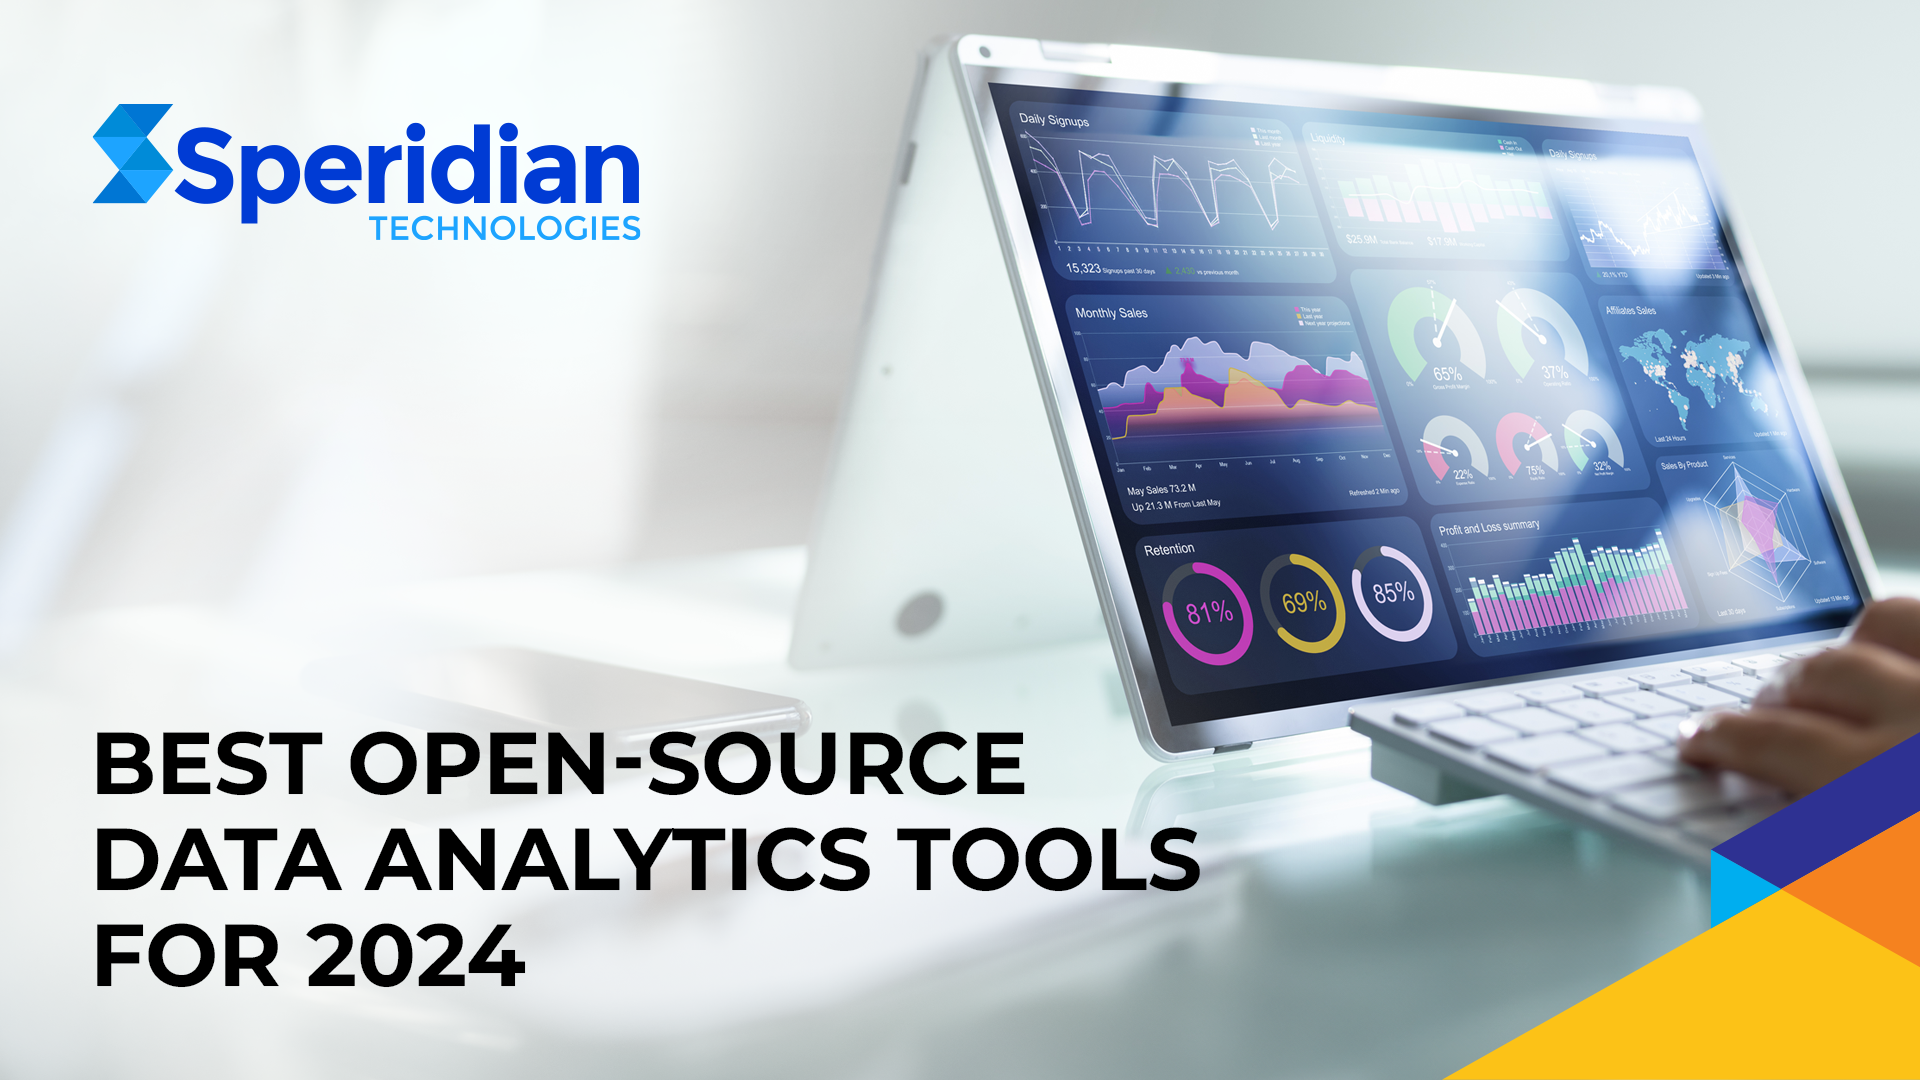 Best Open-Source Data Analytics Tools for 2024